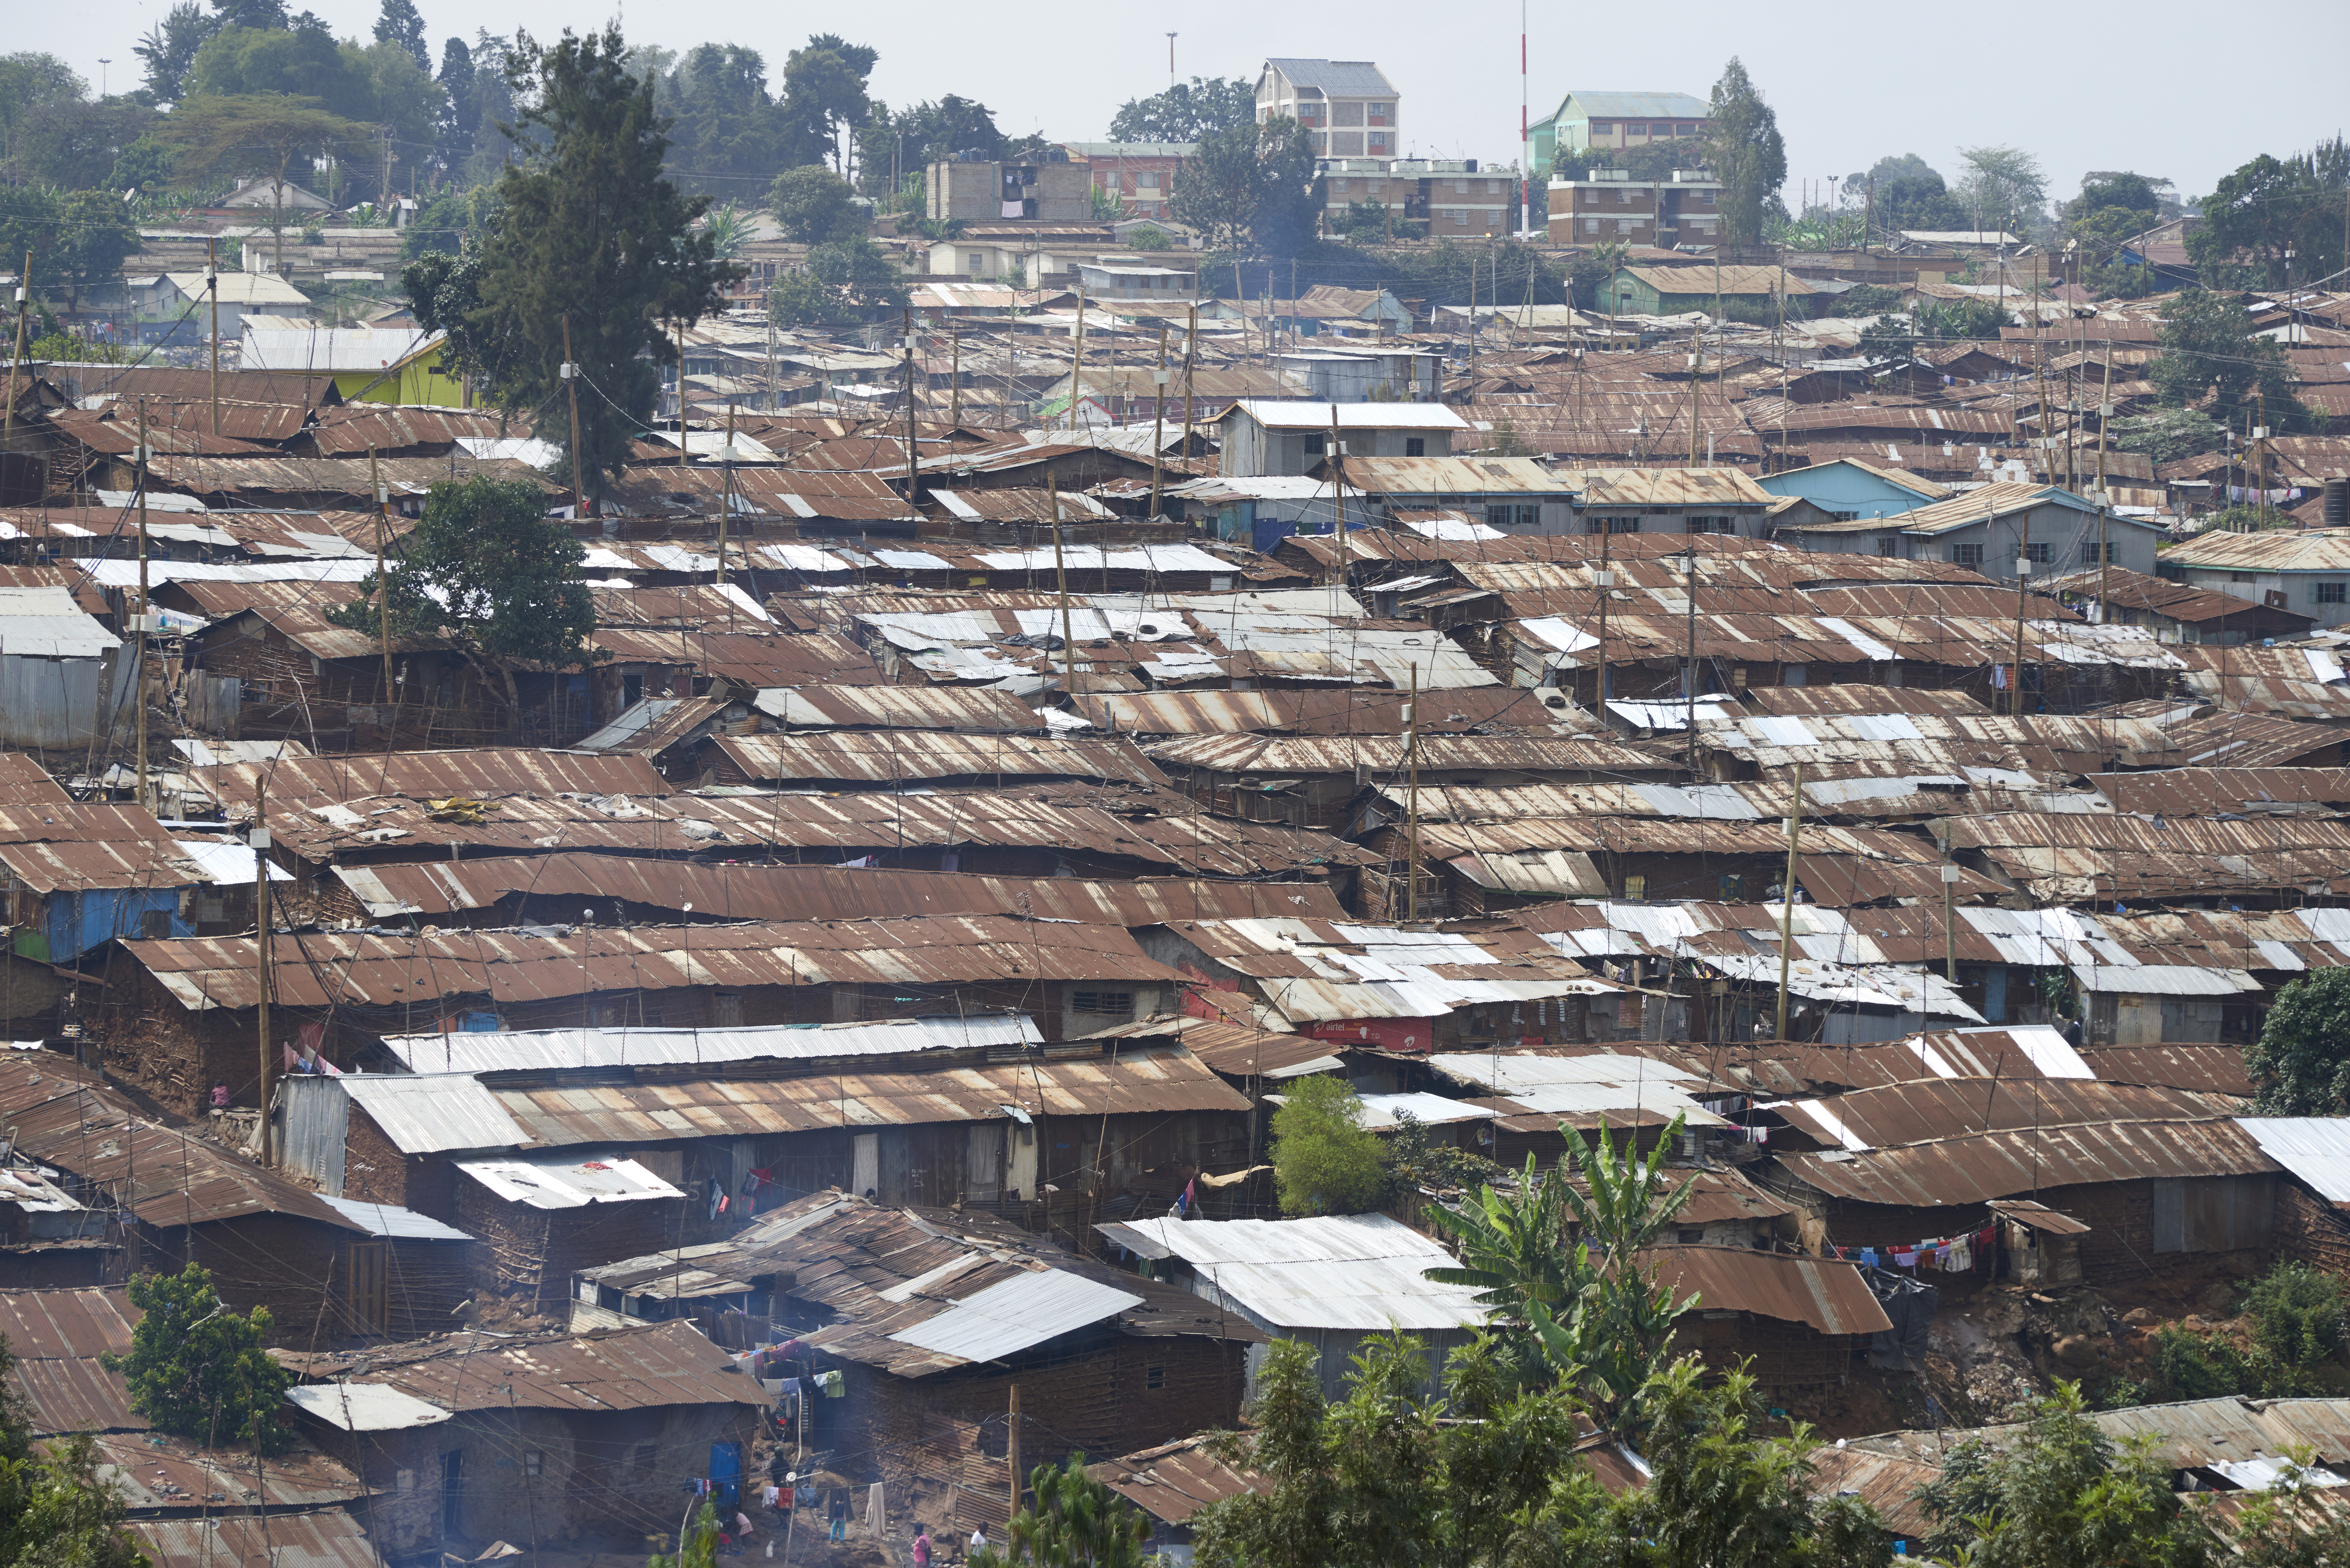 Kibera slum houses 250,000 of Africa's poorest people